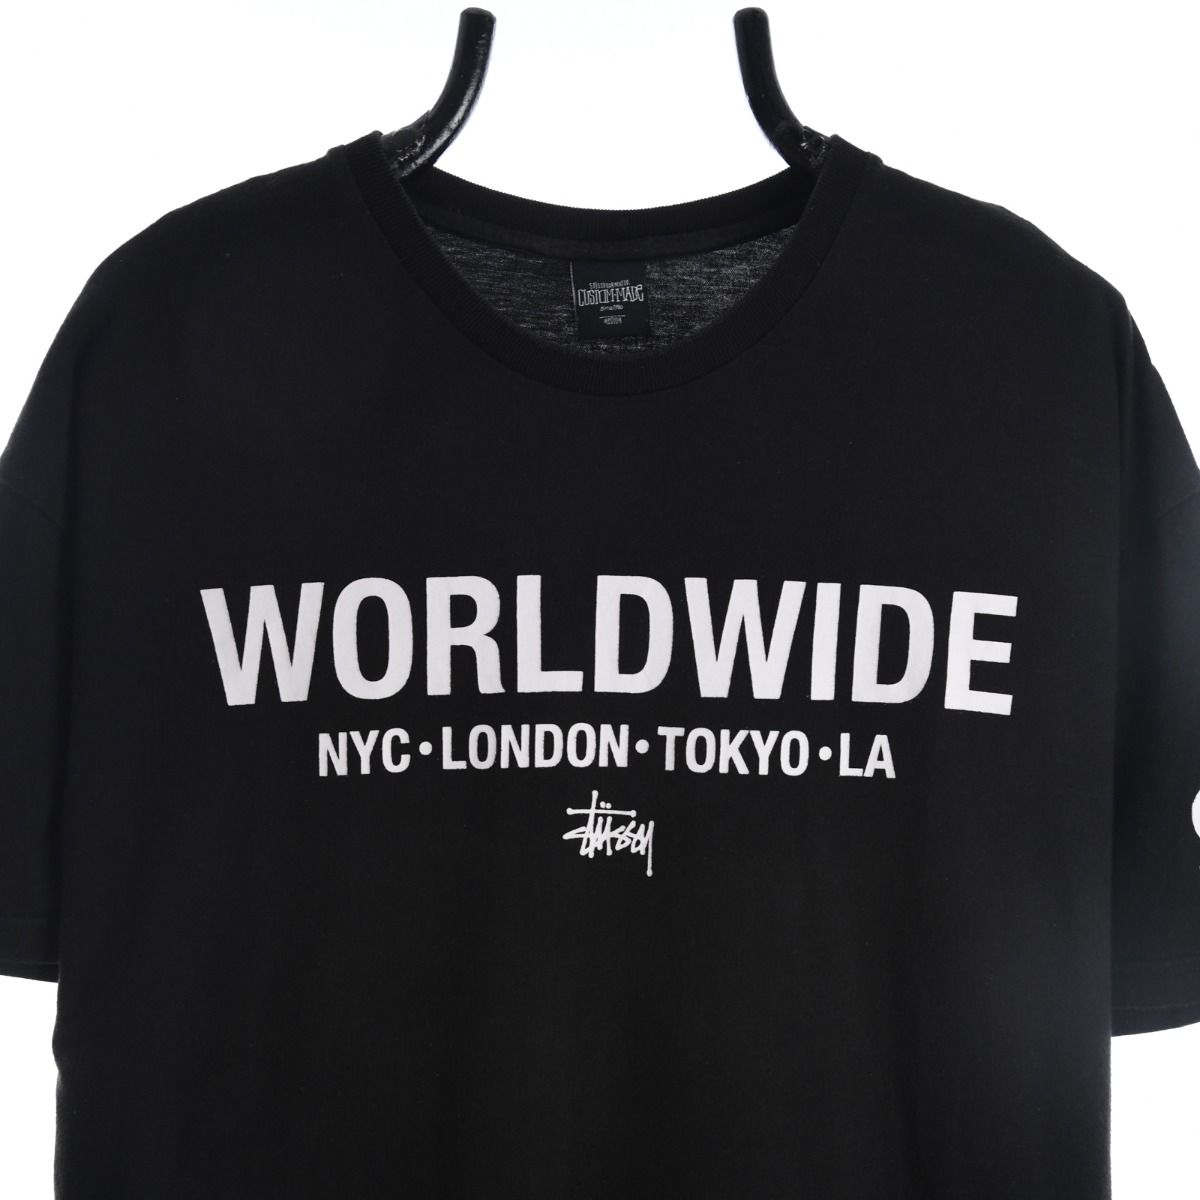 Stussy T-Shirt With Big 'worldwide' Print Design